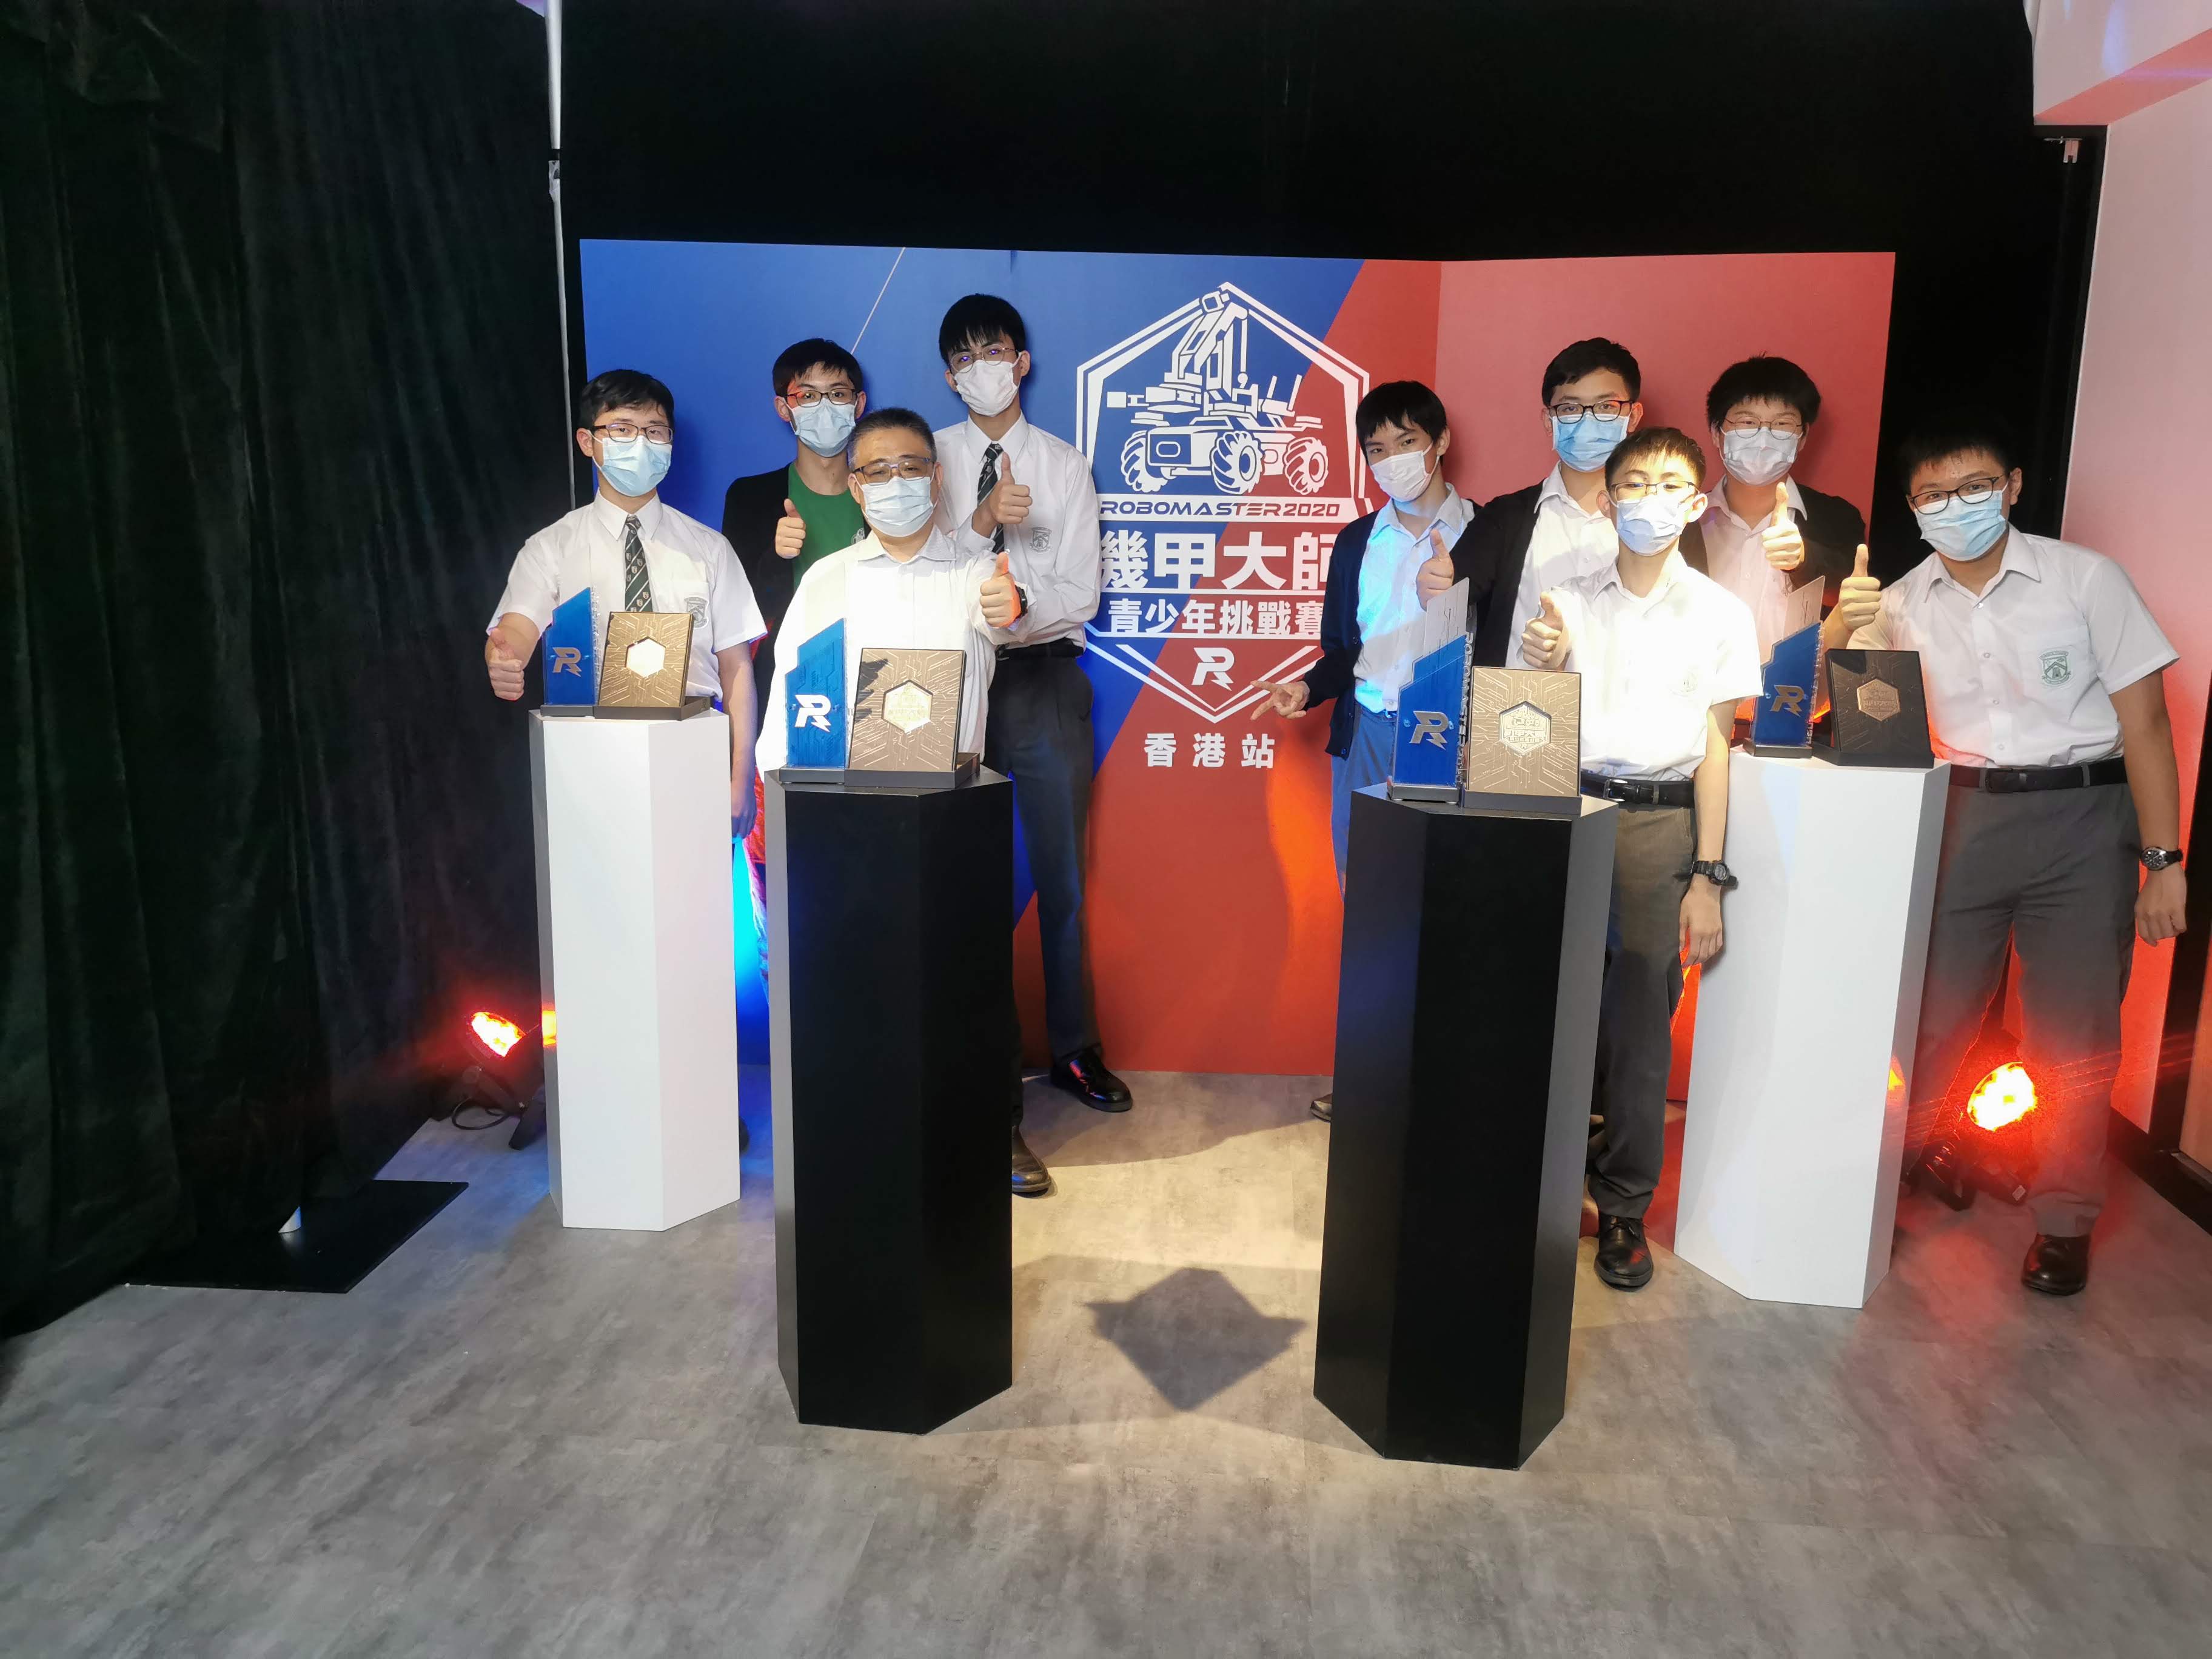 Robomaster 2020機甲大師青少年挑戰賽（香港站）